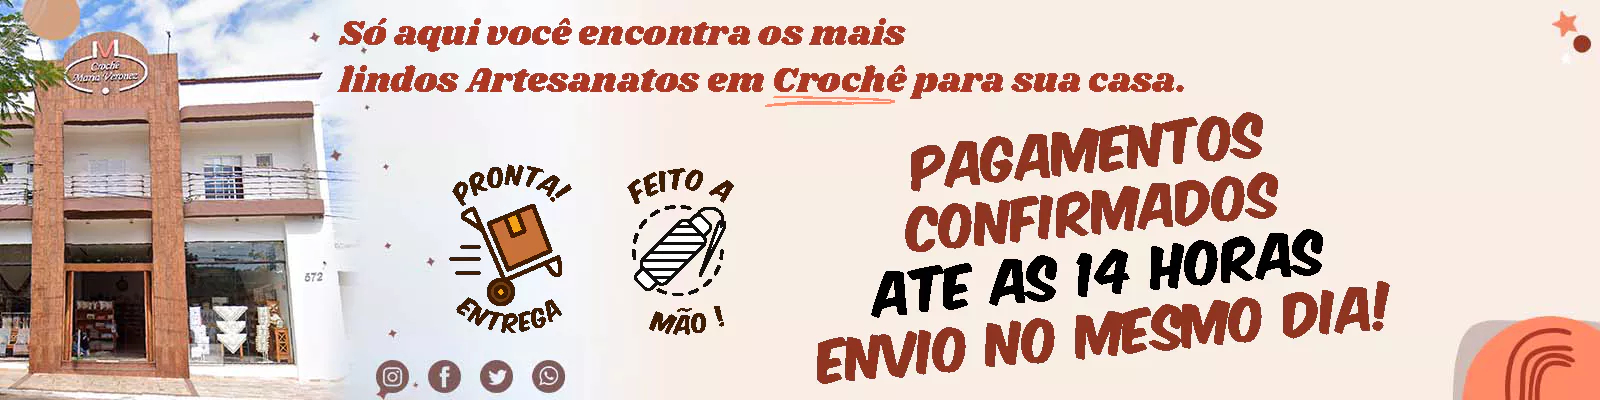 Kit Cozinha Oval 3 Peças Corujinha - Crochê Maria Veronez